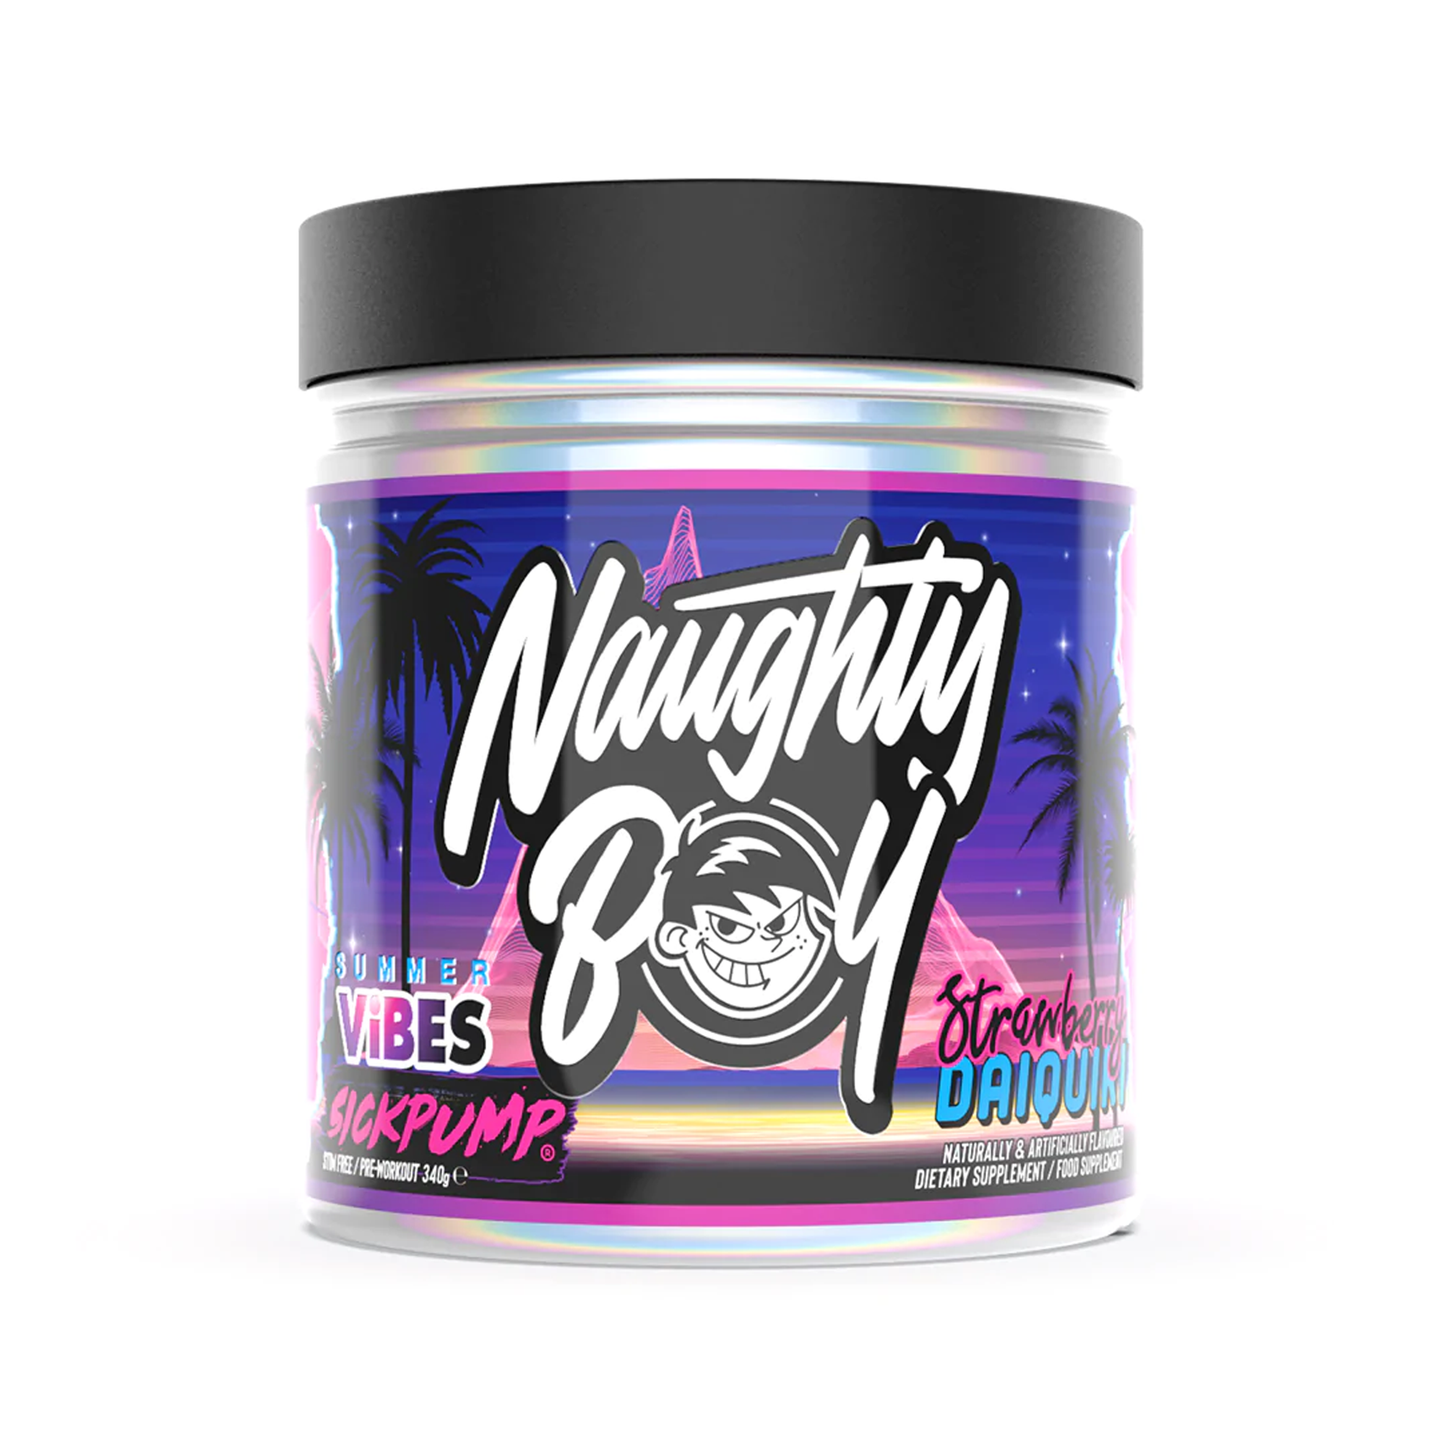 Naughty Boy Sickpump® Pre-workout Summer Vibes - Strawberry Daiquiri Flavour